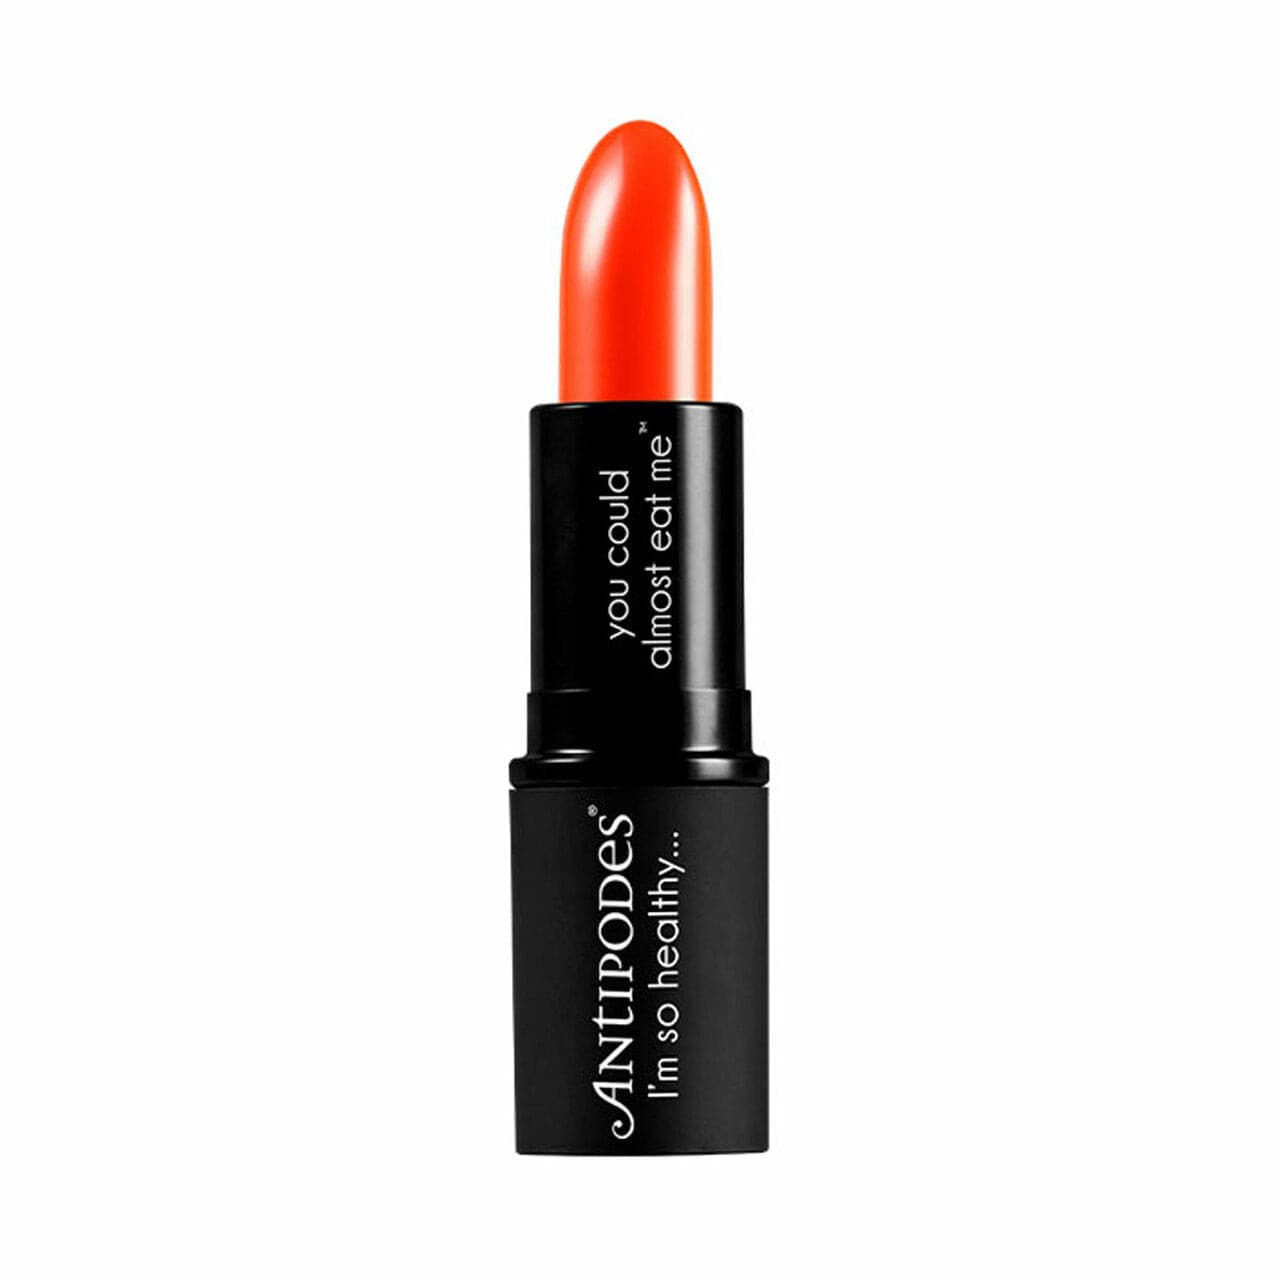 Antipodes Moisture-Boost Natural Lipstick 4g - Piha Beach Tangerine.